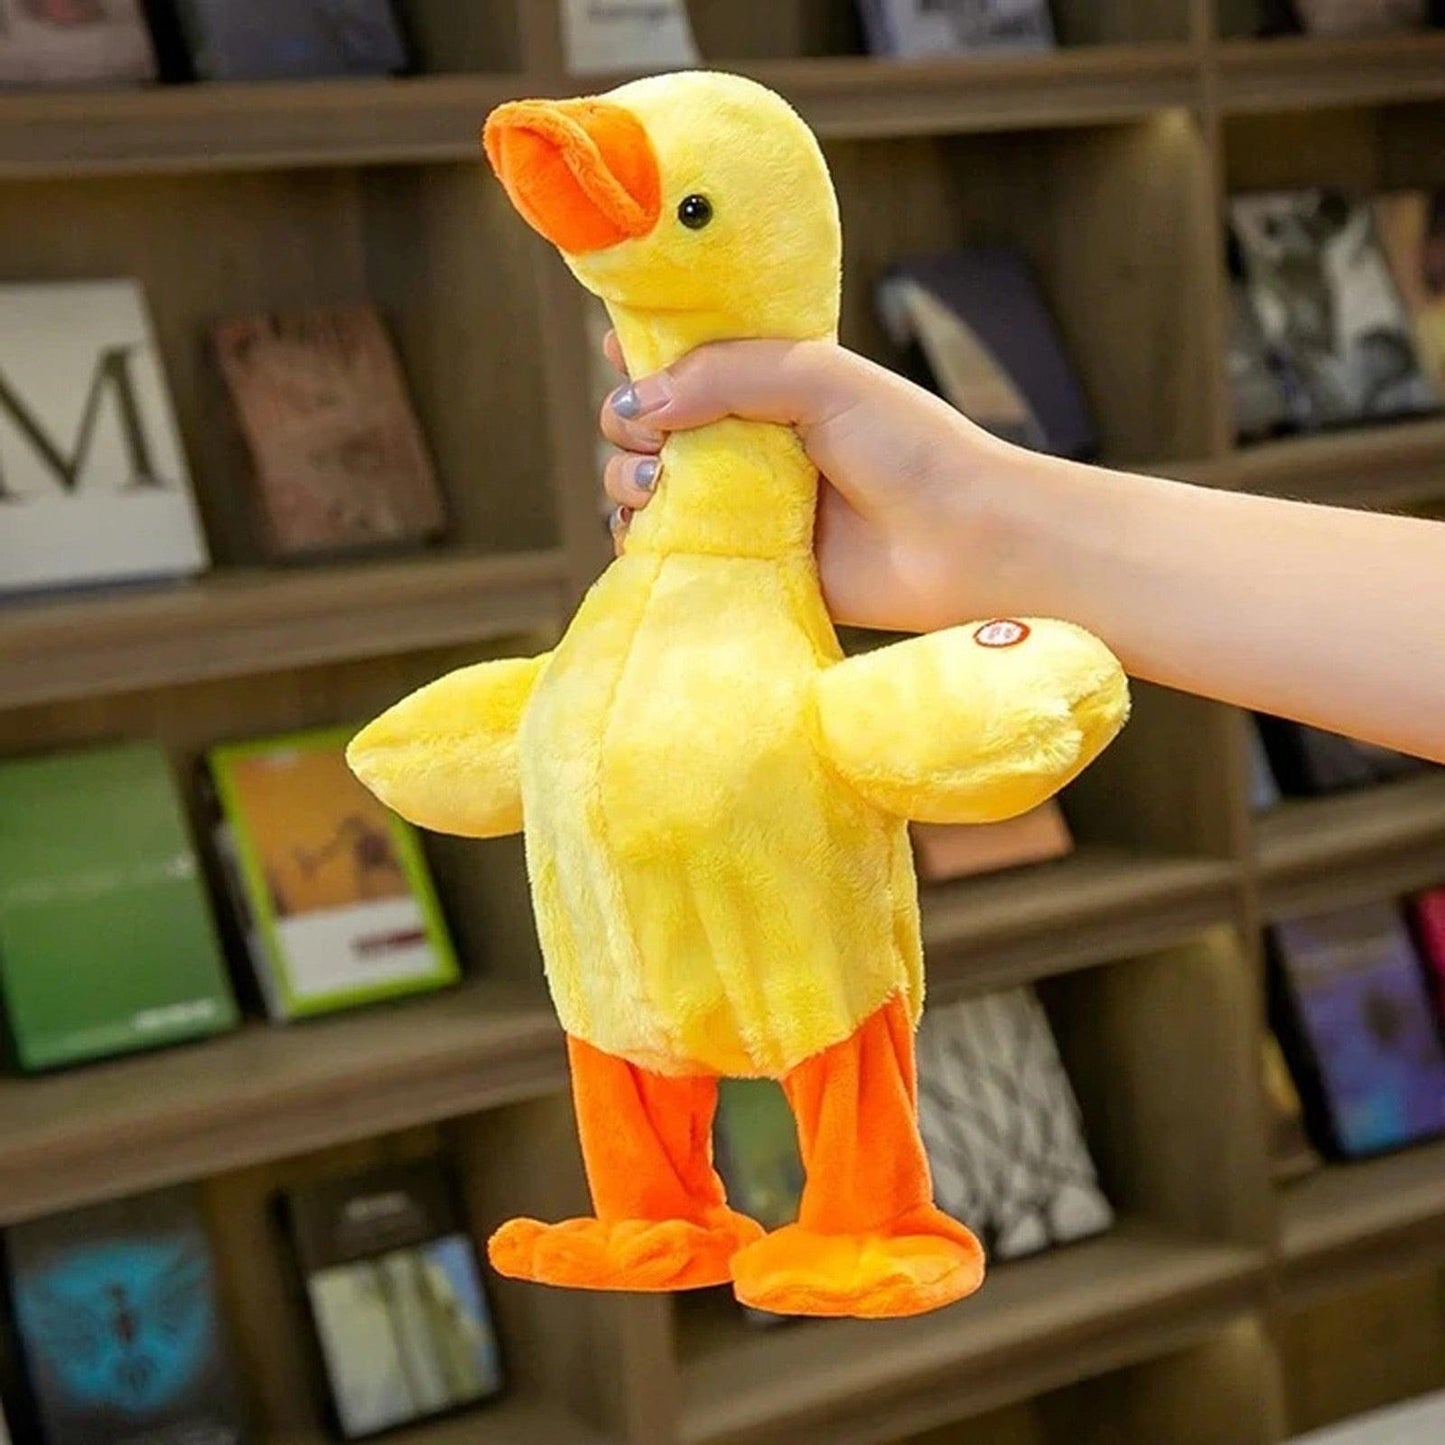 Singing and walking electronic duck plush toy